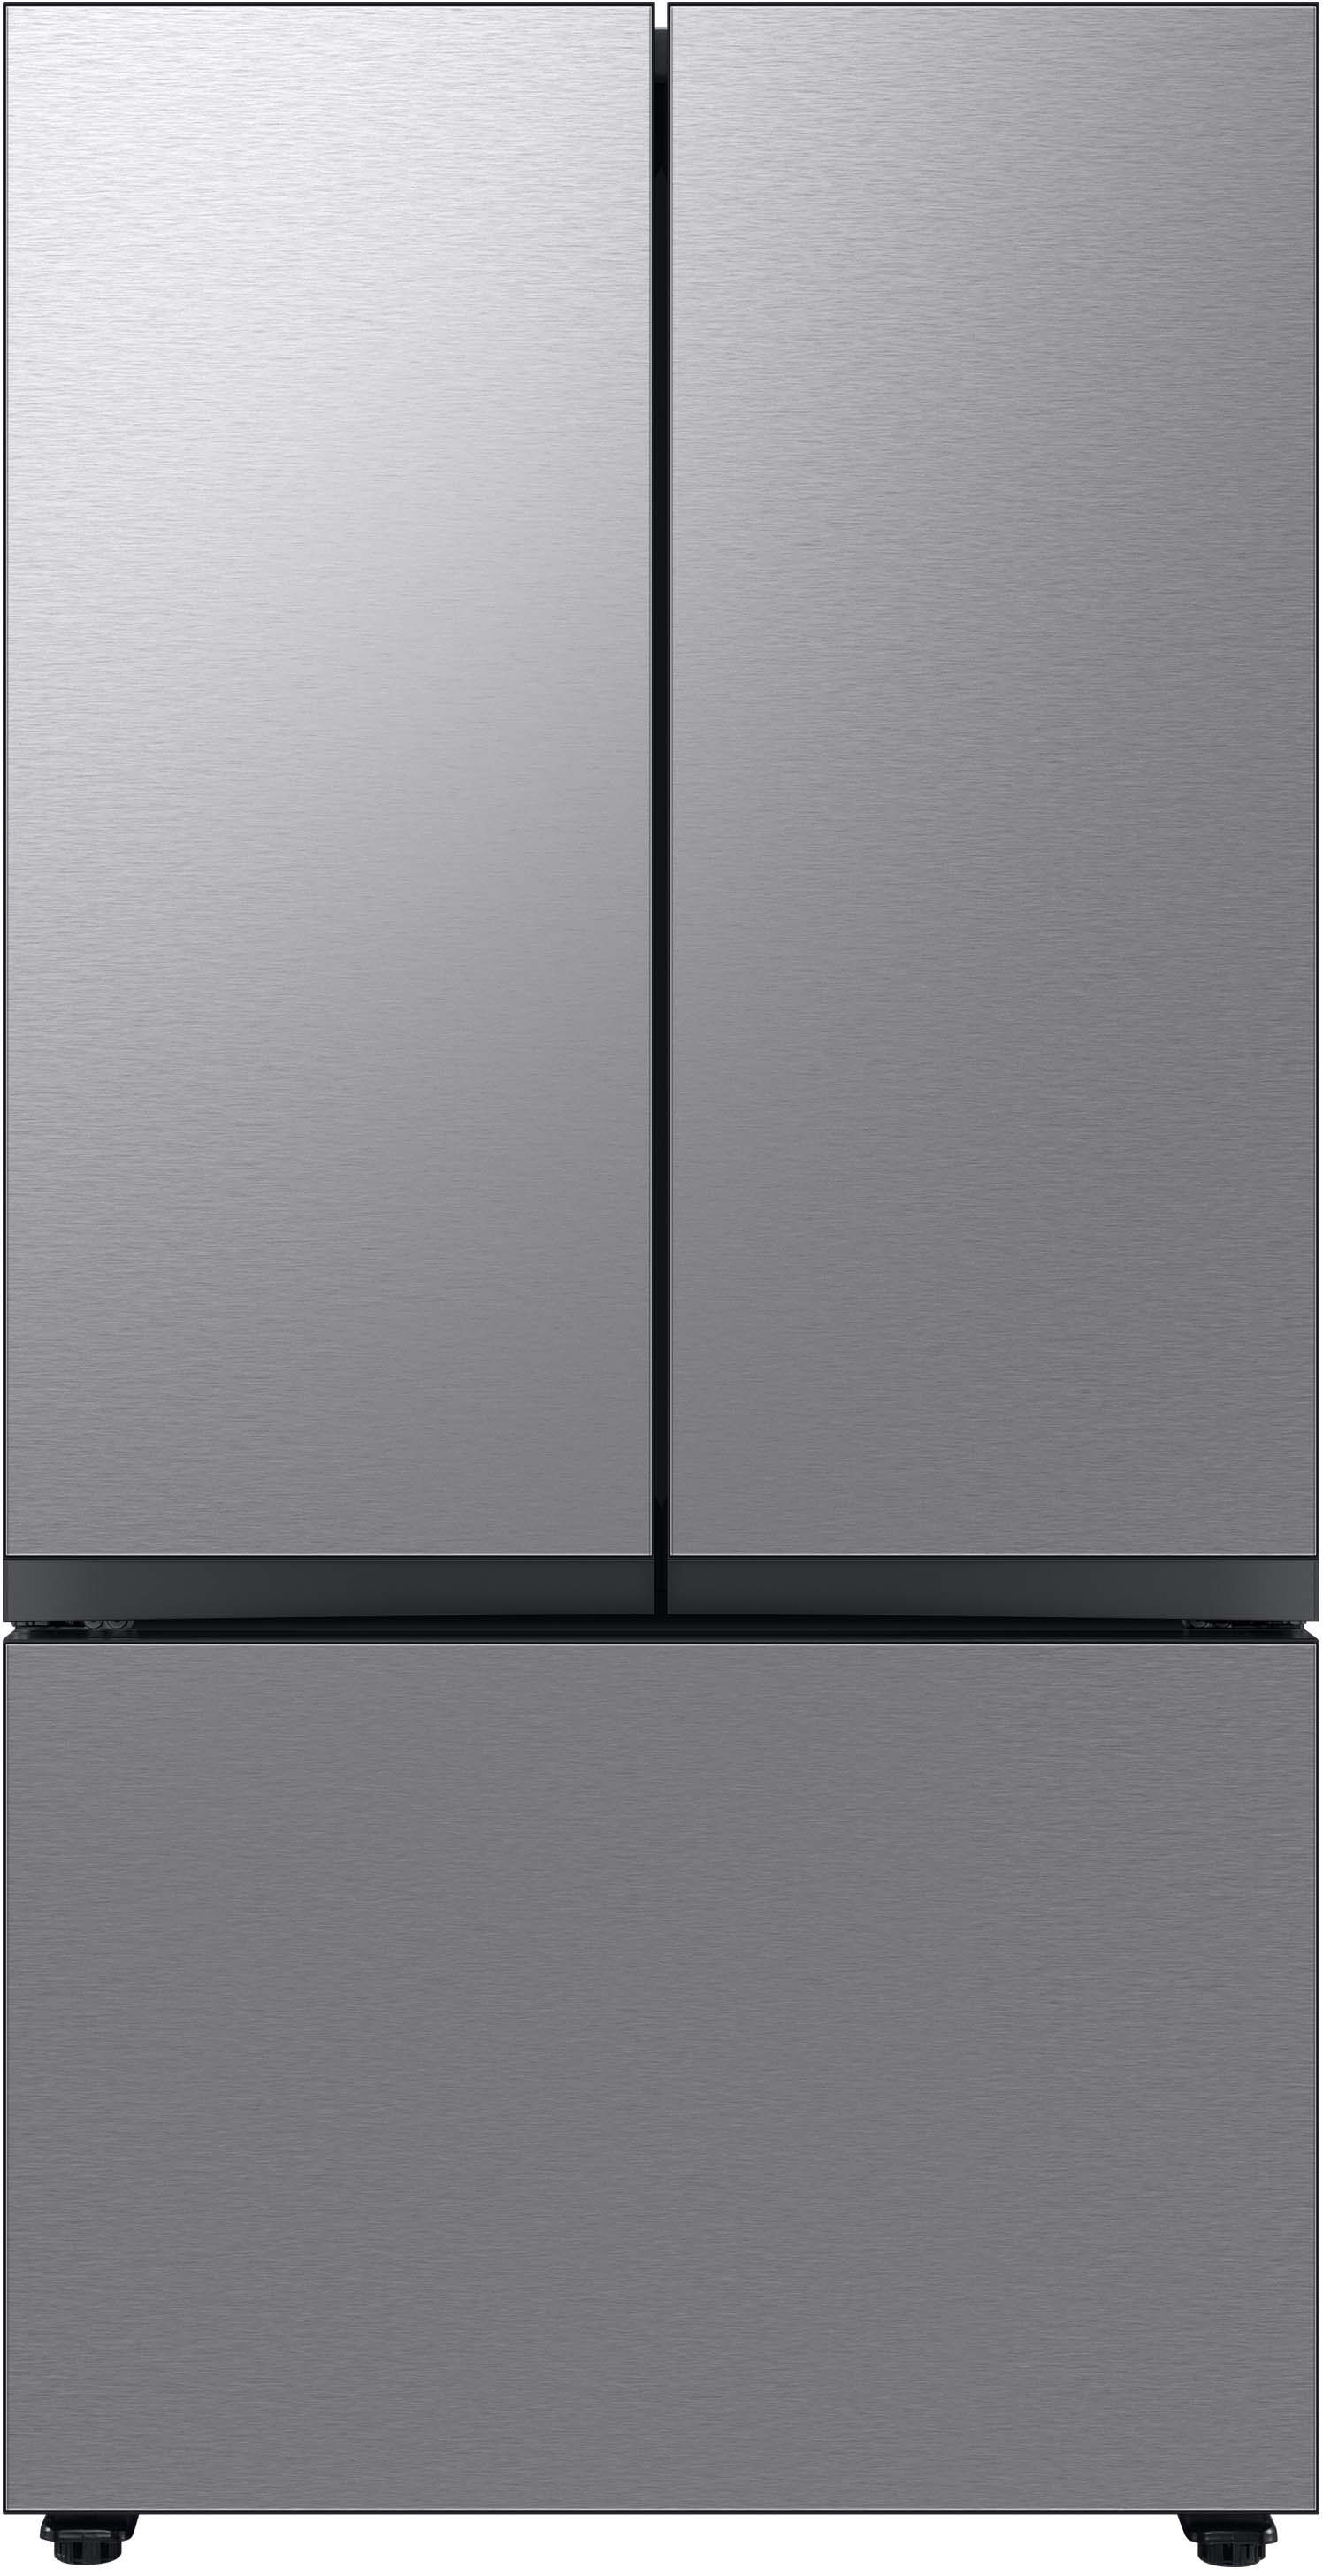 Samsung – Bespoke 30 cu. ft 3-Door French Door Refrigerator with AutoFill Water Pitcher – Stainless steel